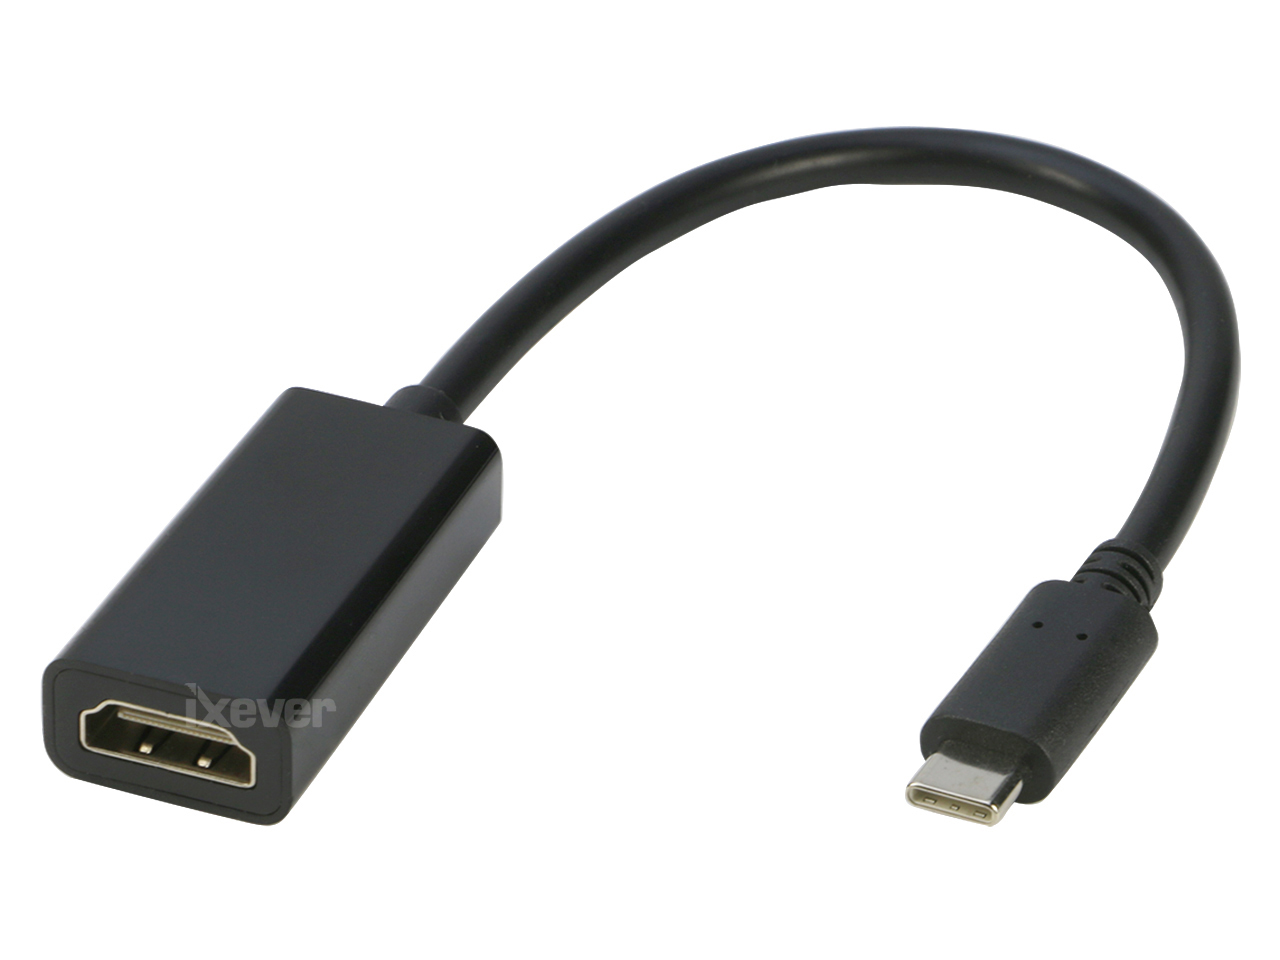 Ripley - CABLE ADAPTADOR DONGLE USB TIPO C A HDMI CONVERTIDOR USB 3.1 A 4K.